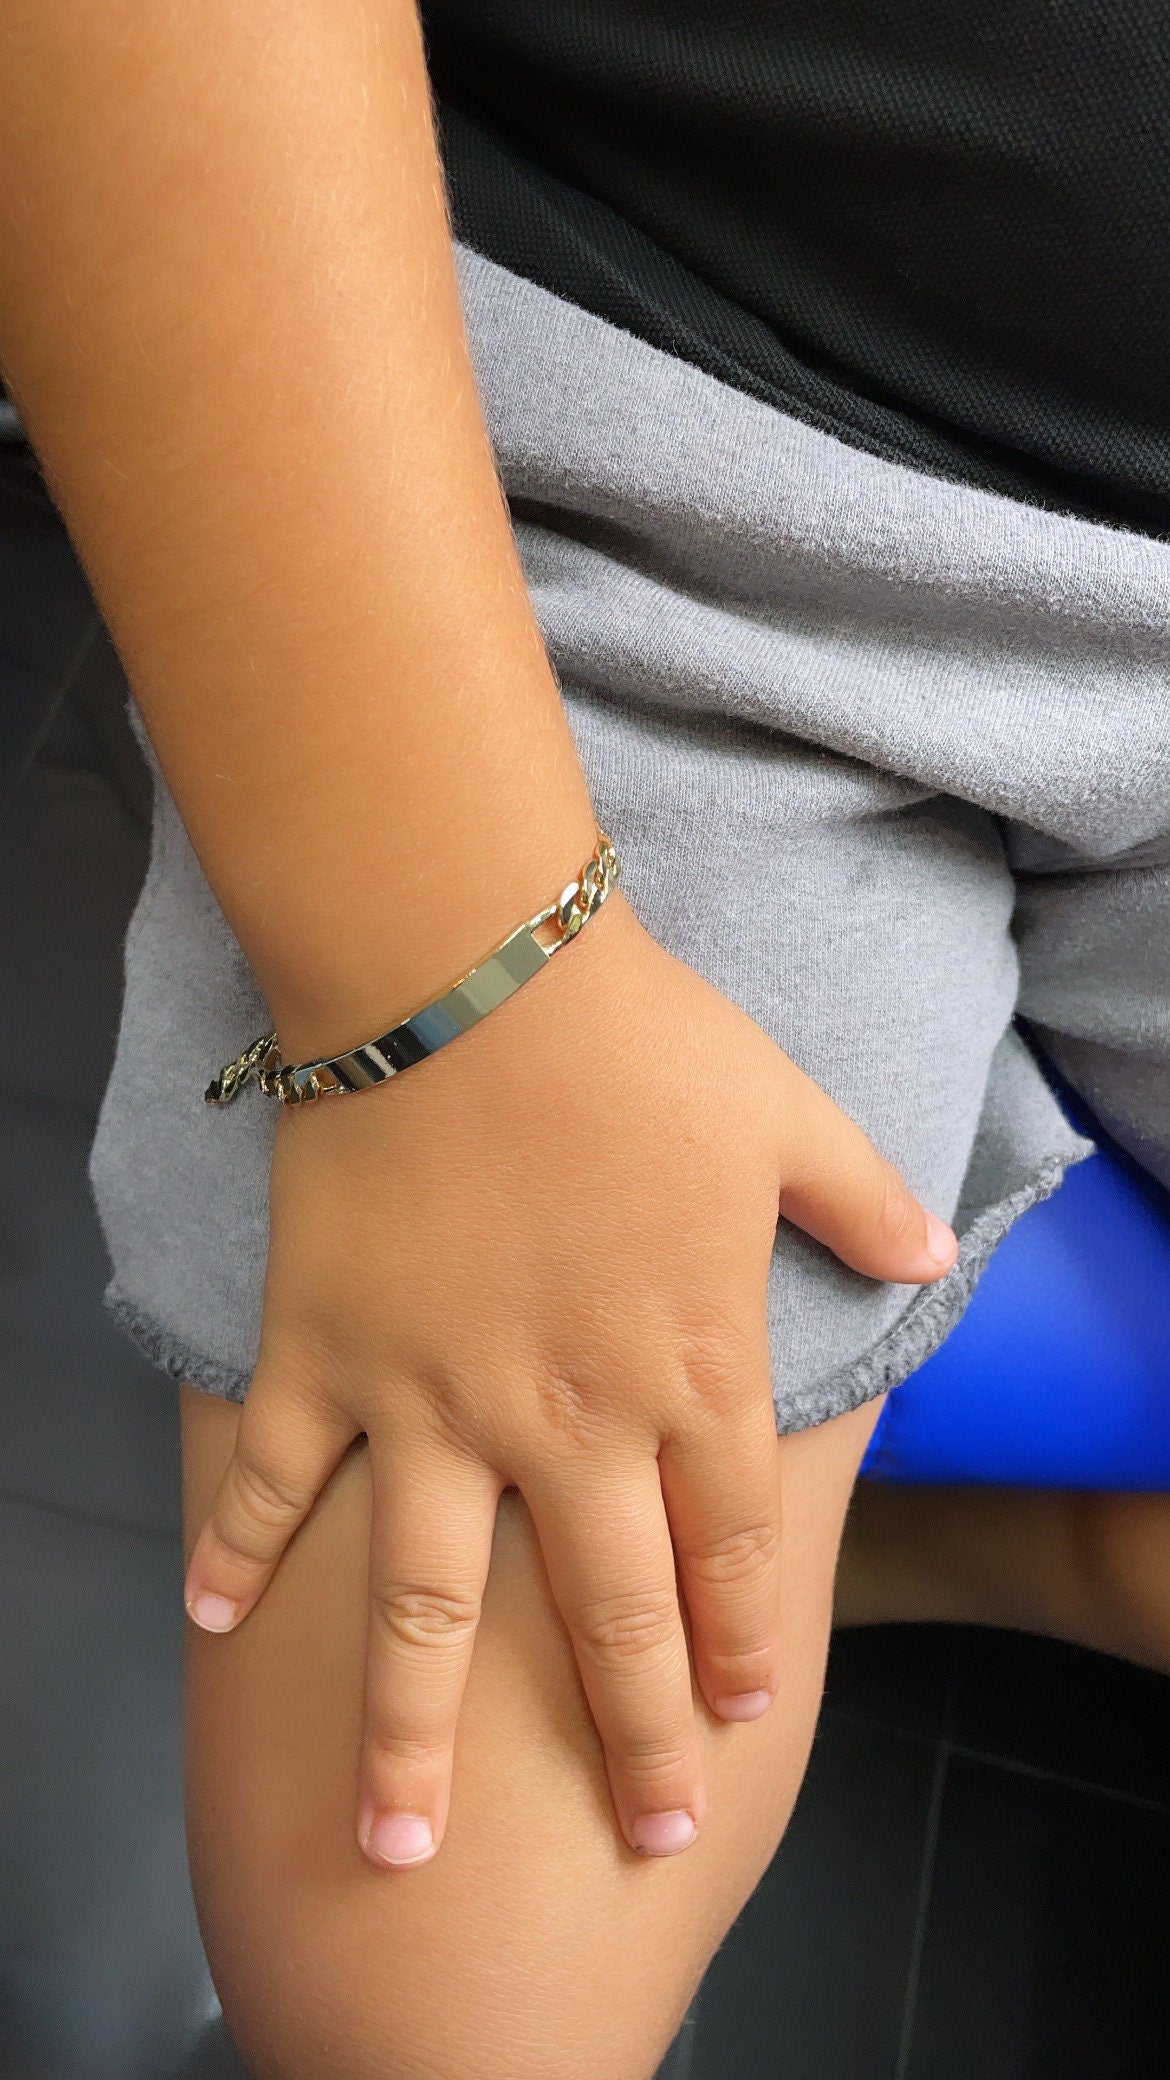 Engraved Children's Bracelets -Personalized Bracelets for kids